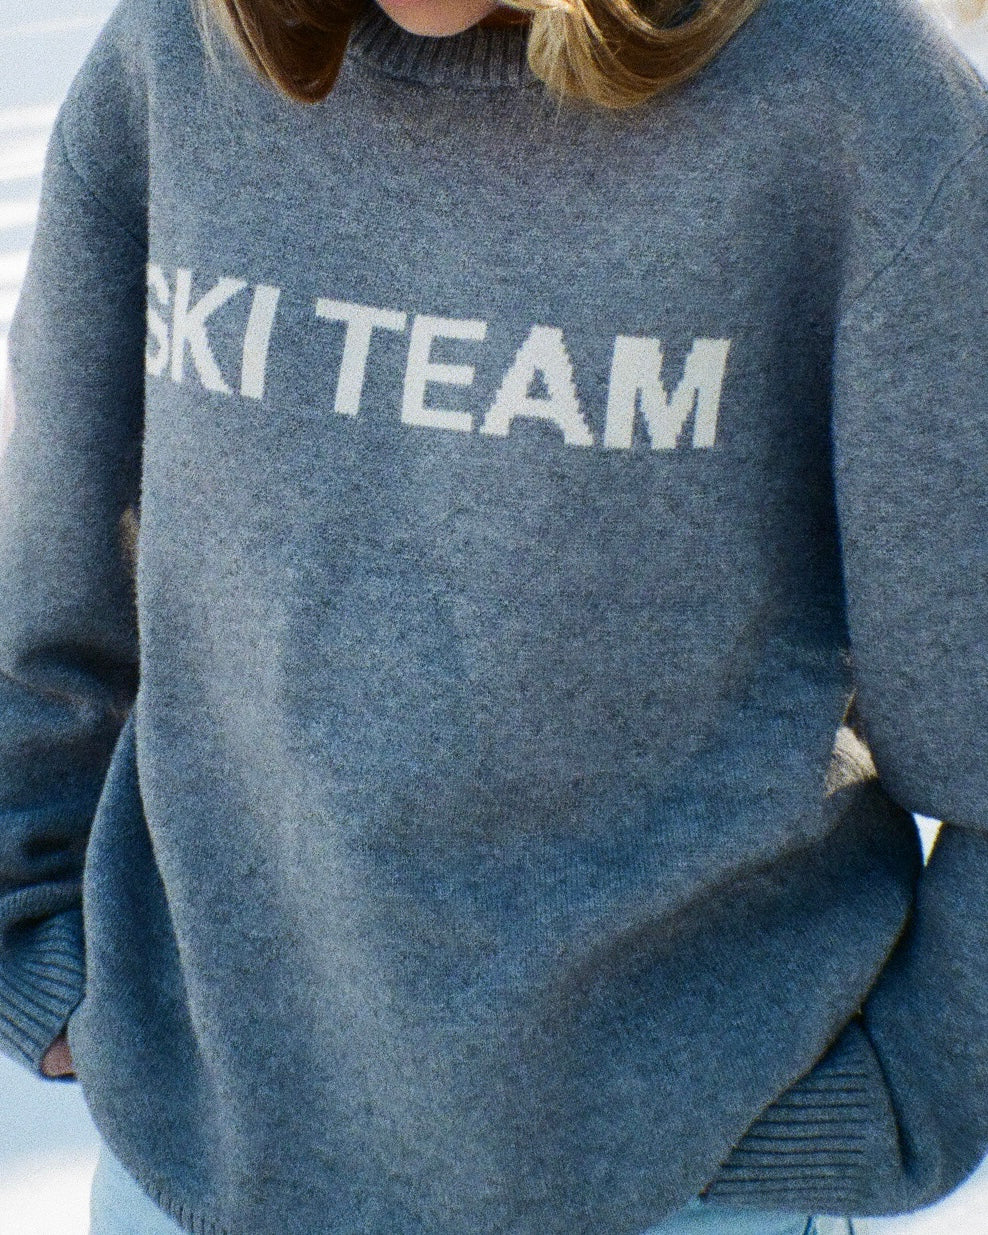 "Ski Team" Knit Sweater in Gray